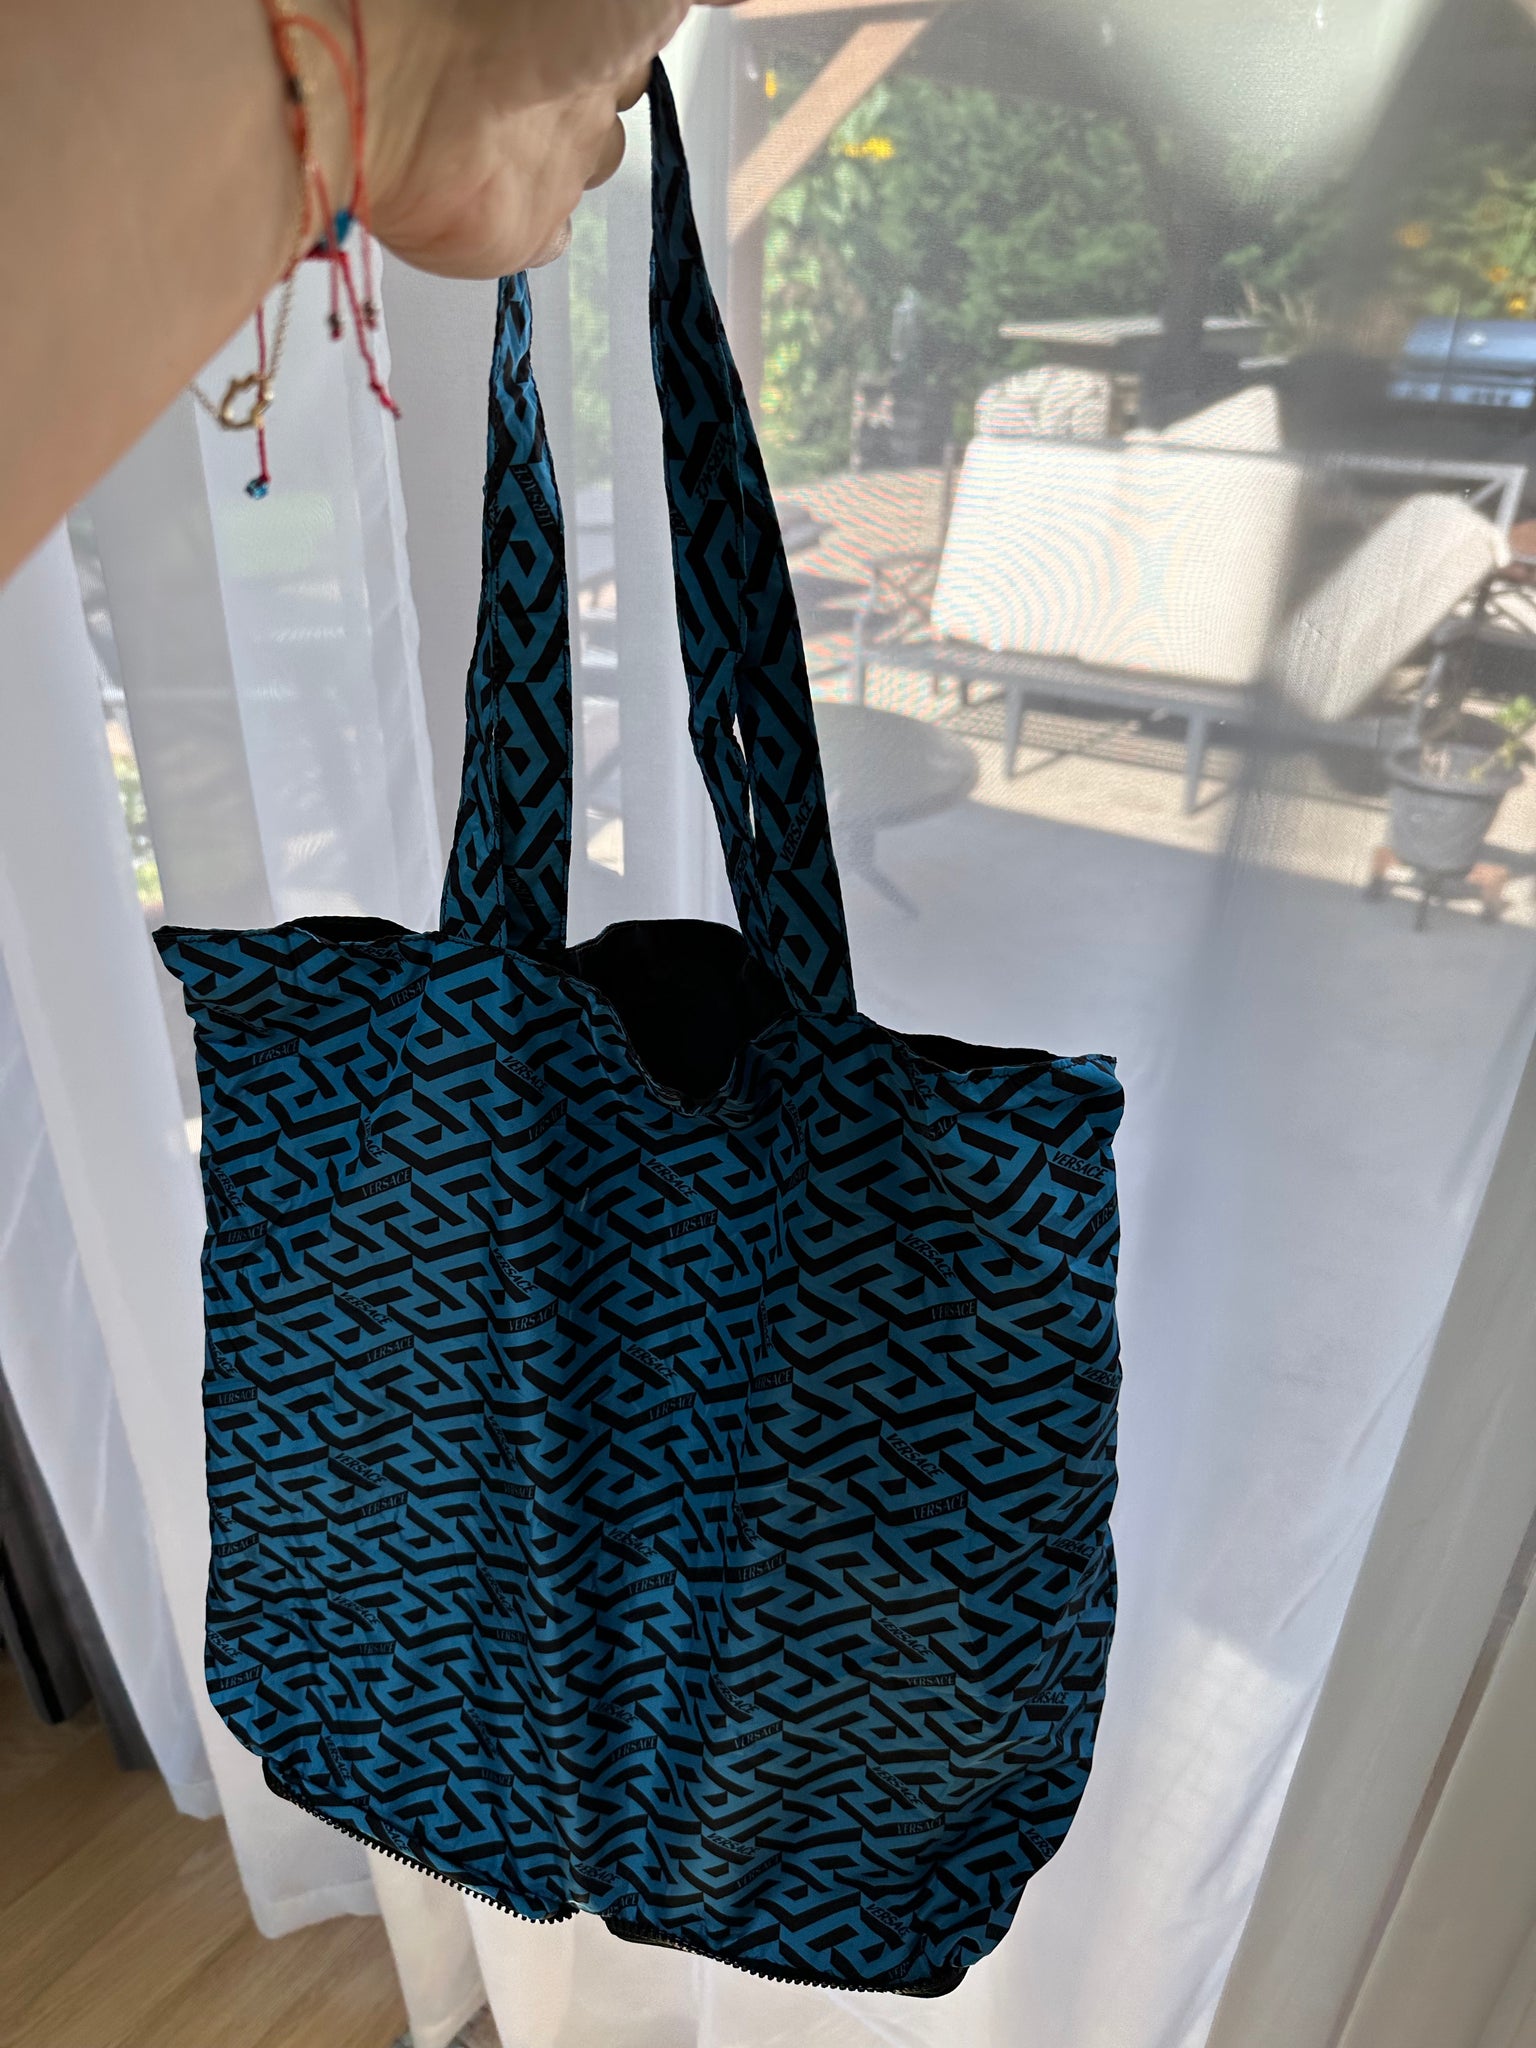 Versace Neo Nylon Large Tote Bag